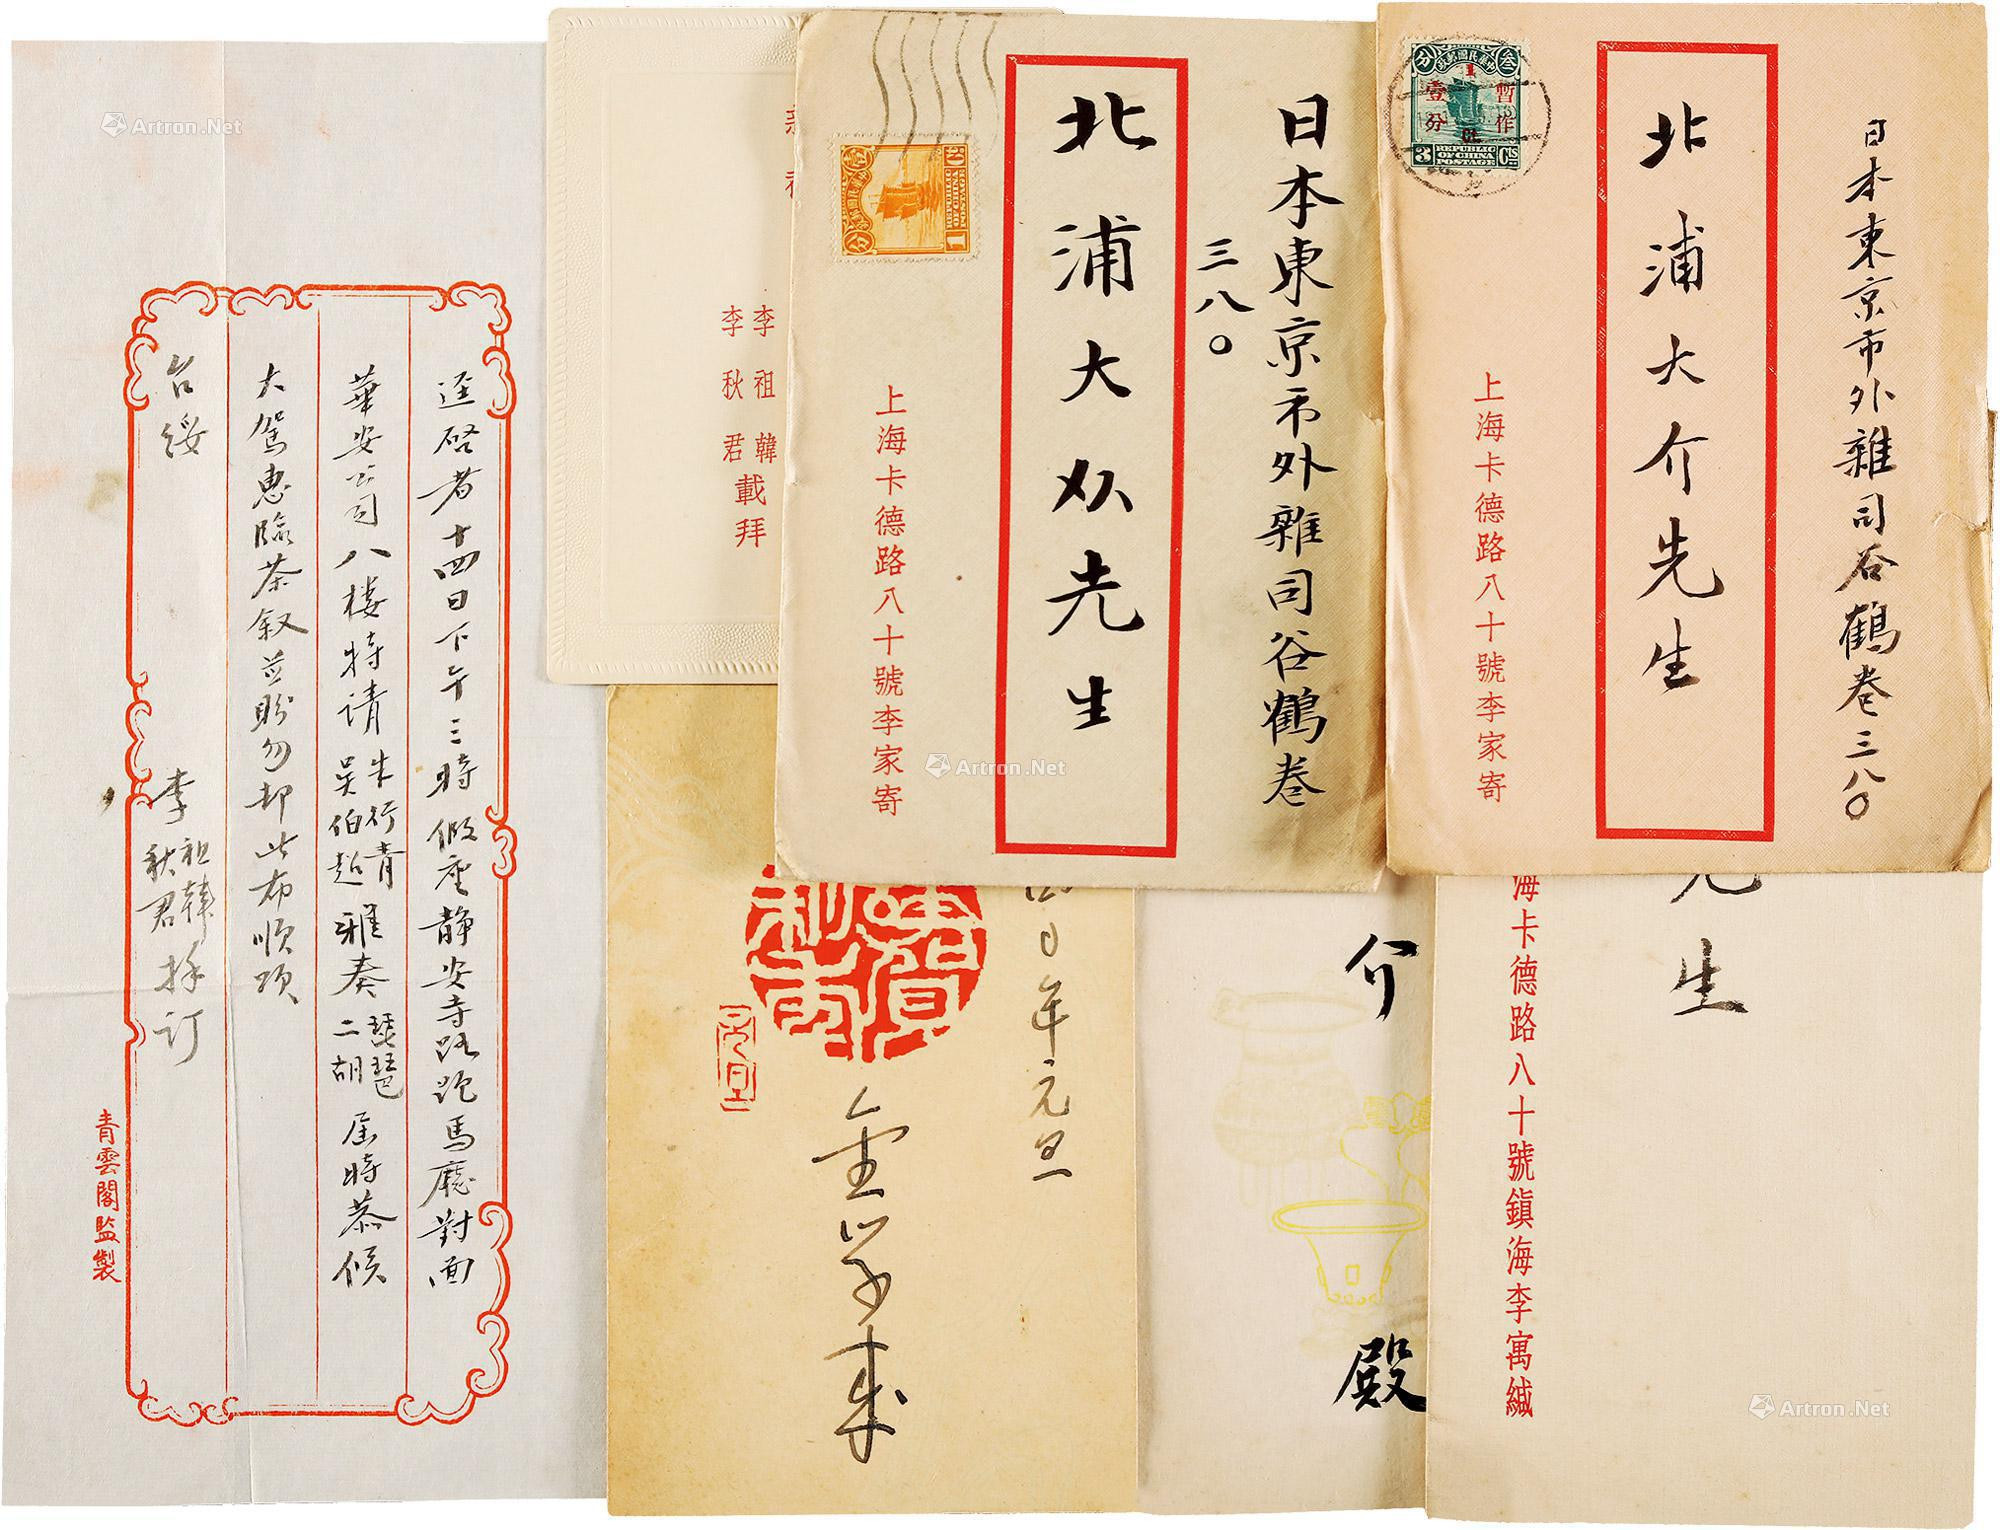 Group of signatures greeting card invitation of Jin Xuecheng， Li Zuhan， Li Qiujun， with original covers